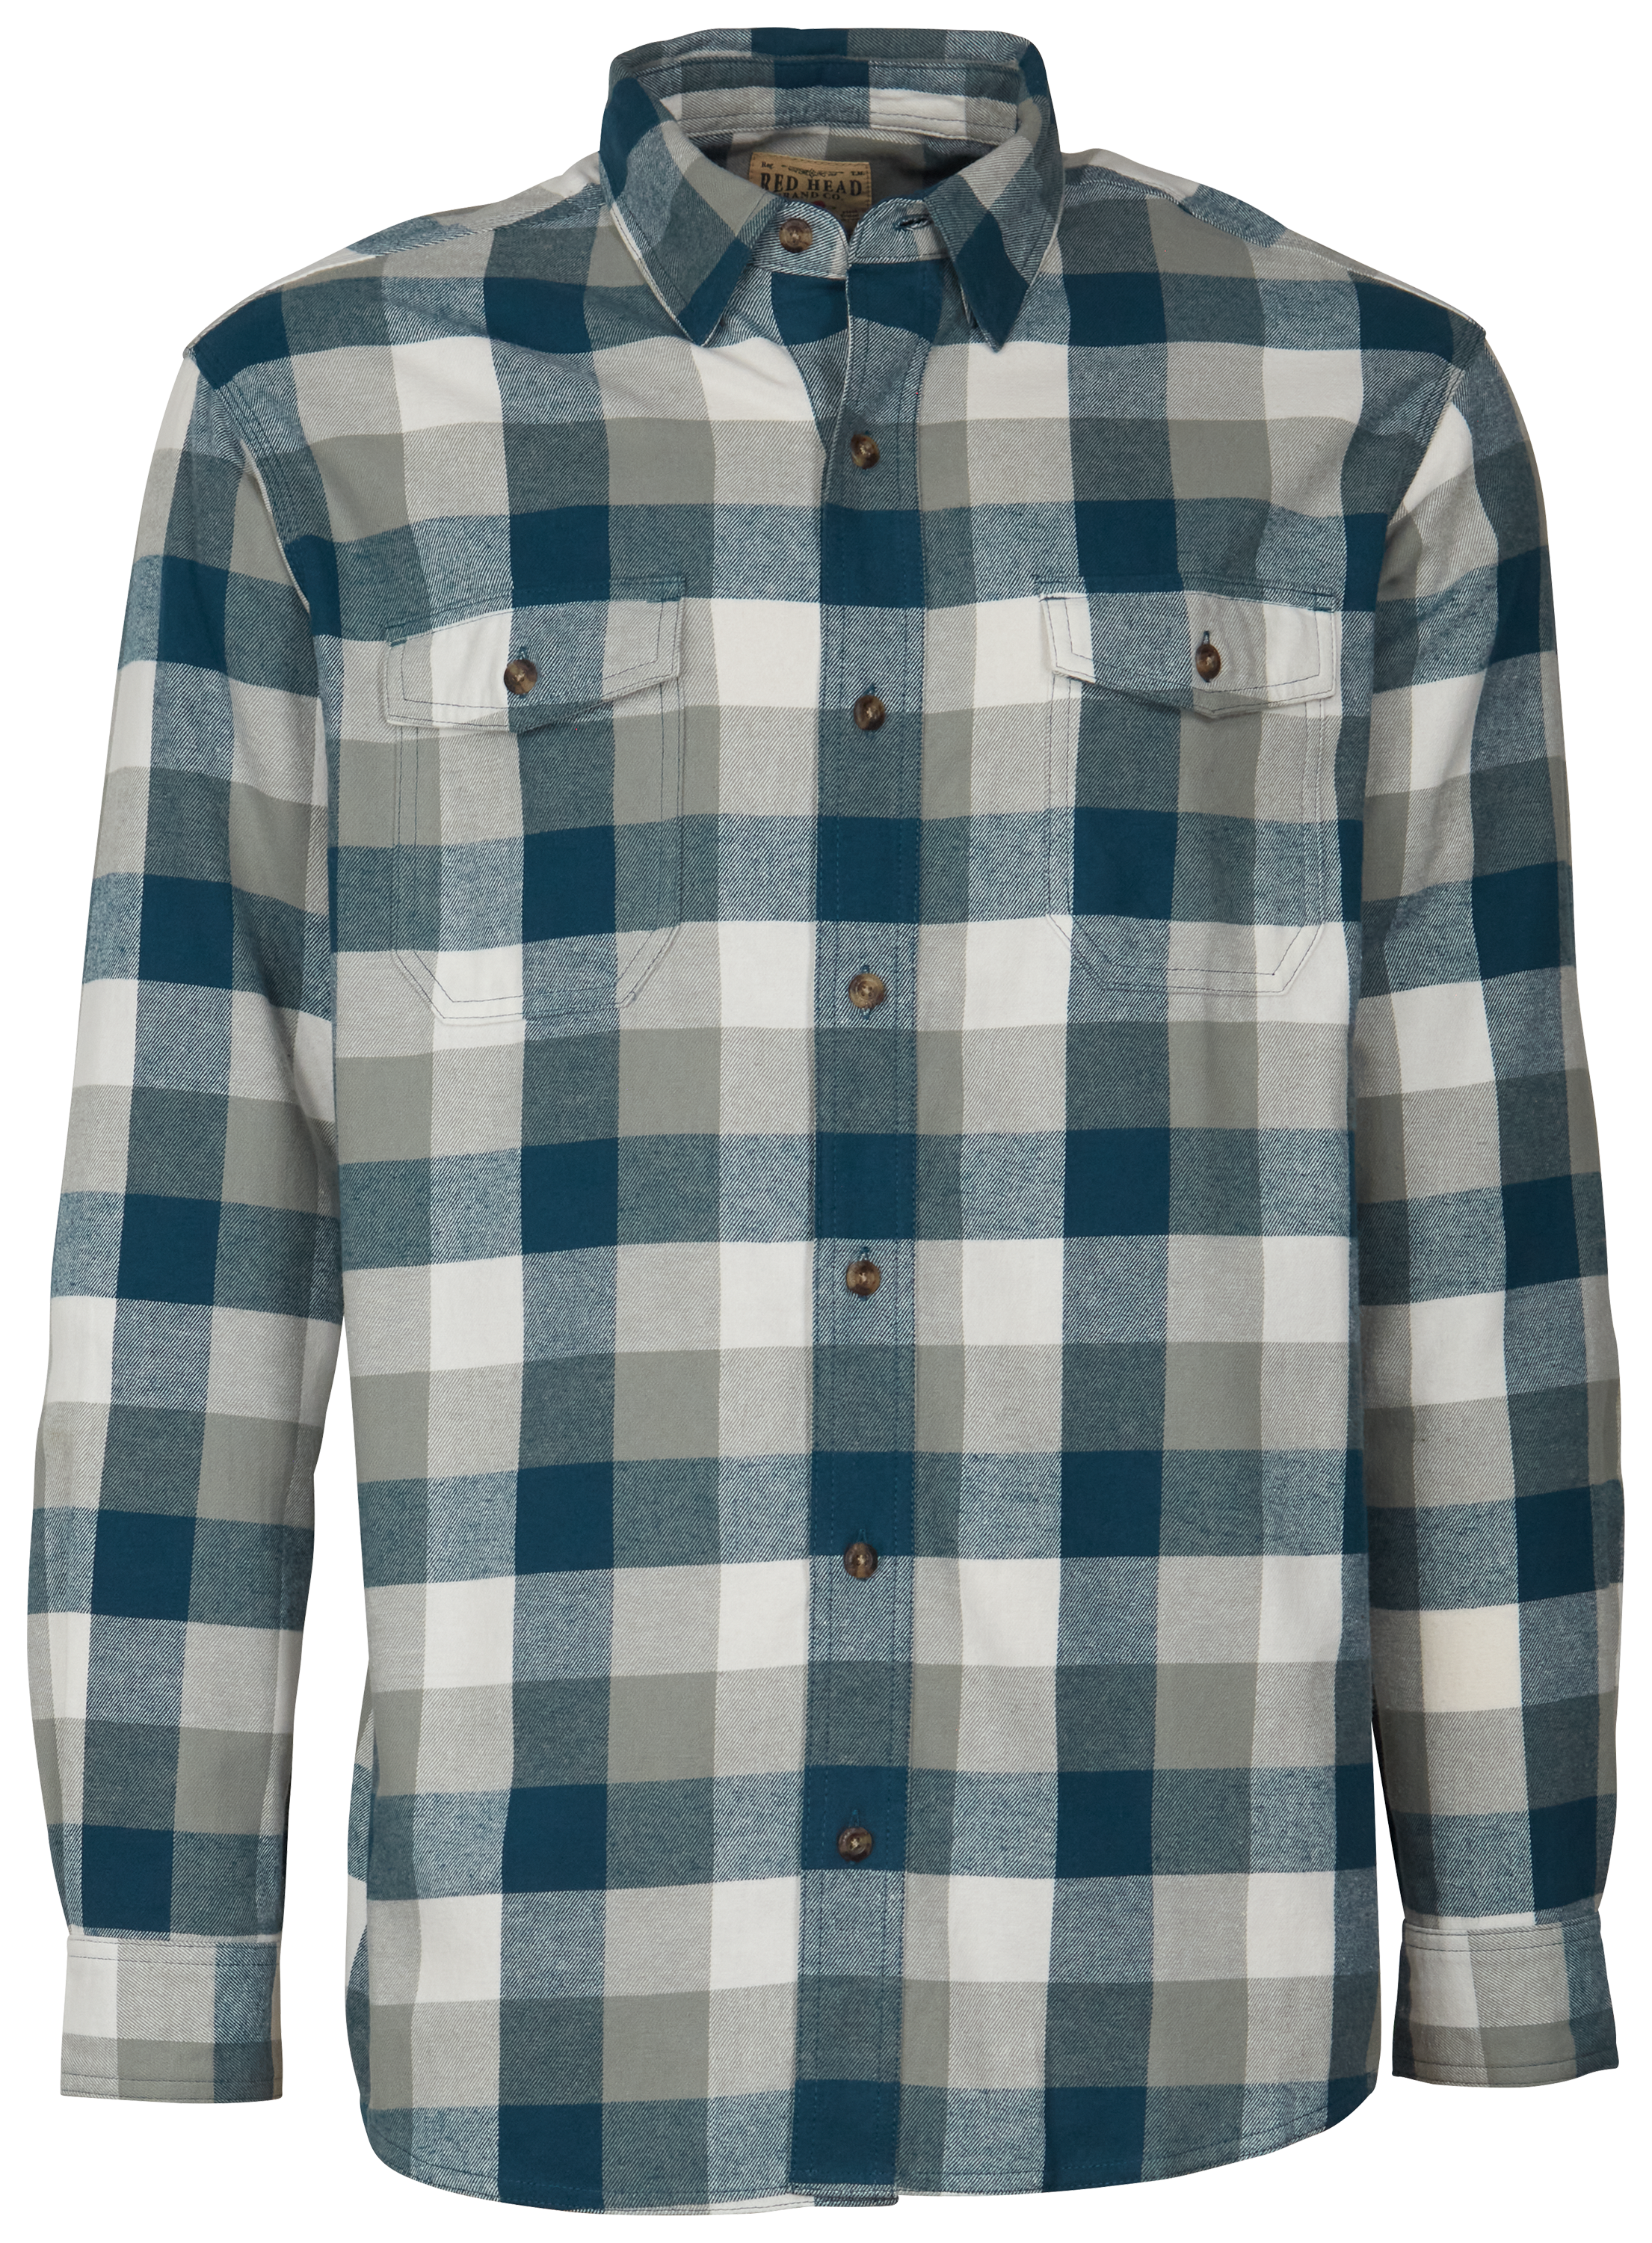 RedHead Buffalo Creek Flannel Long-Sleeve Shirt for Men - Navy/White - 3XL